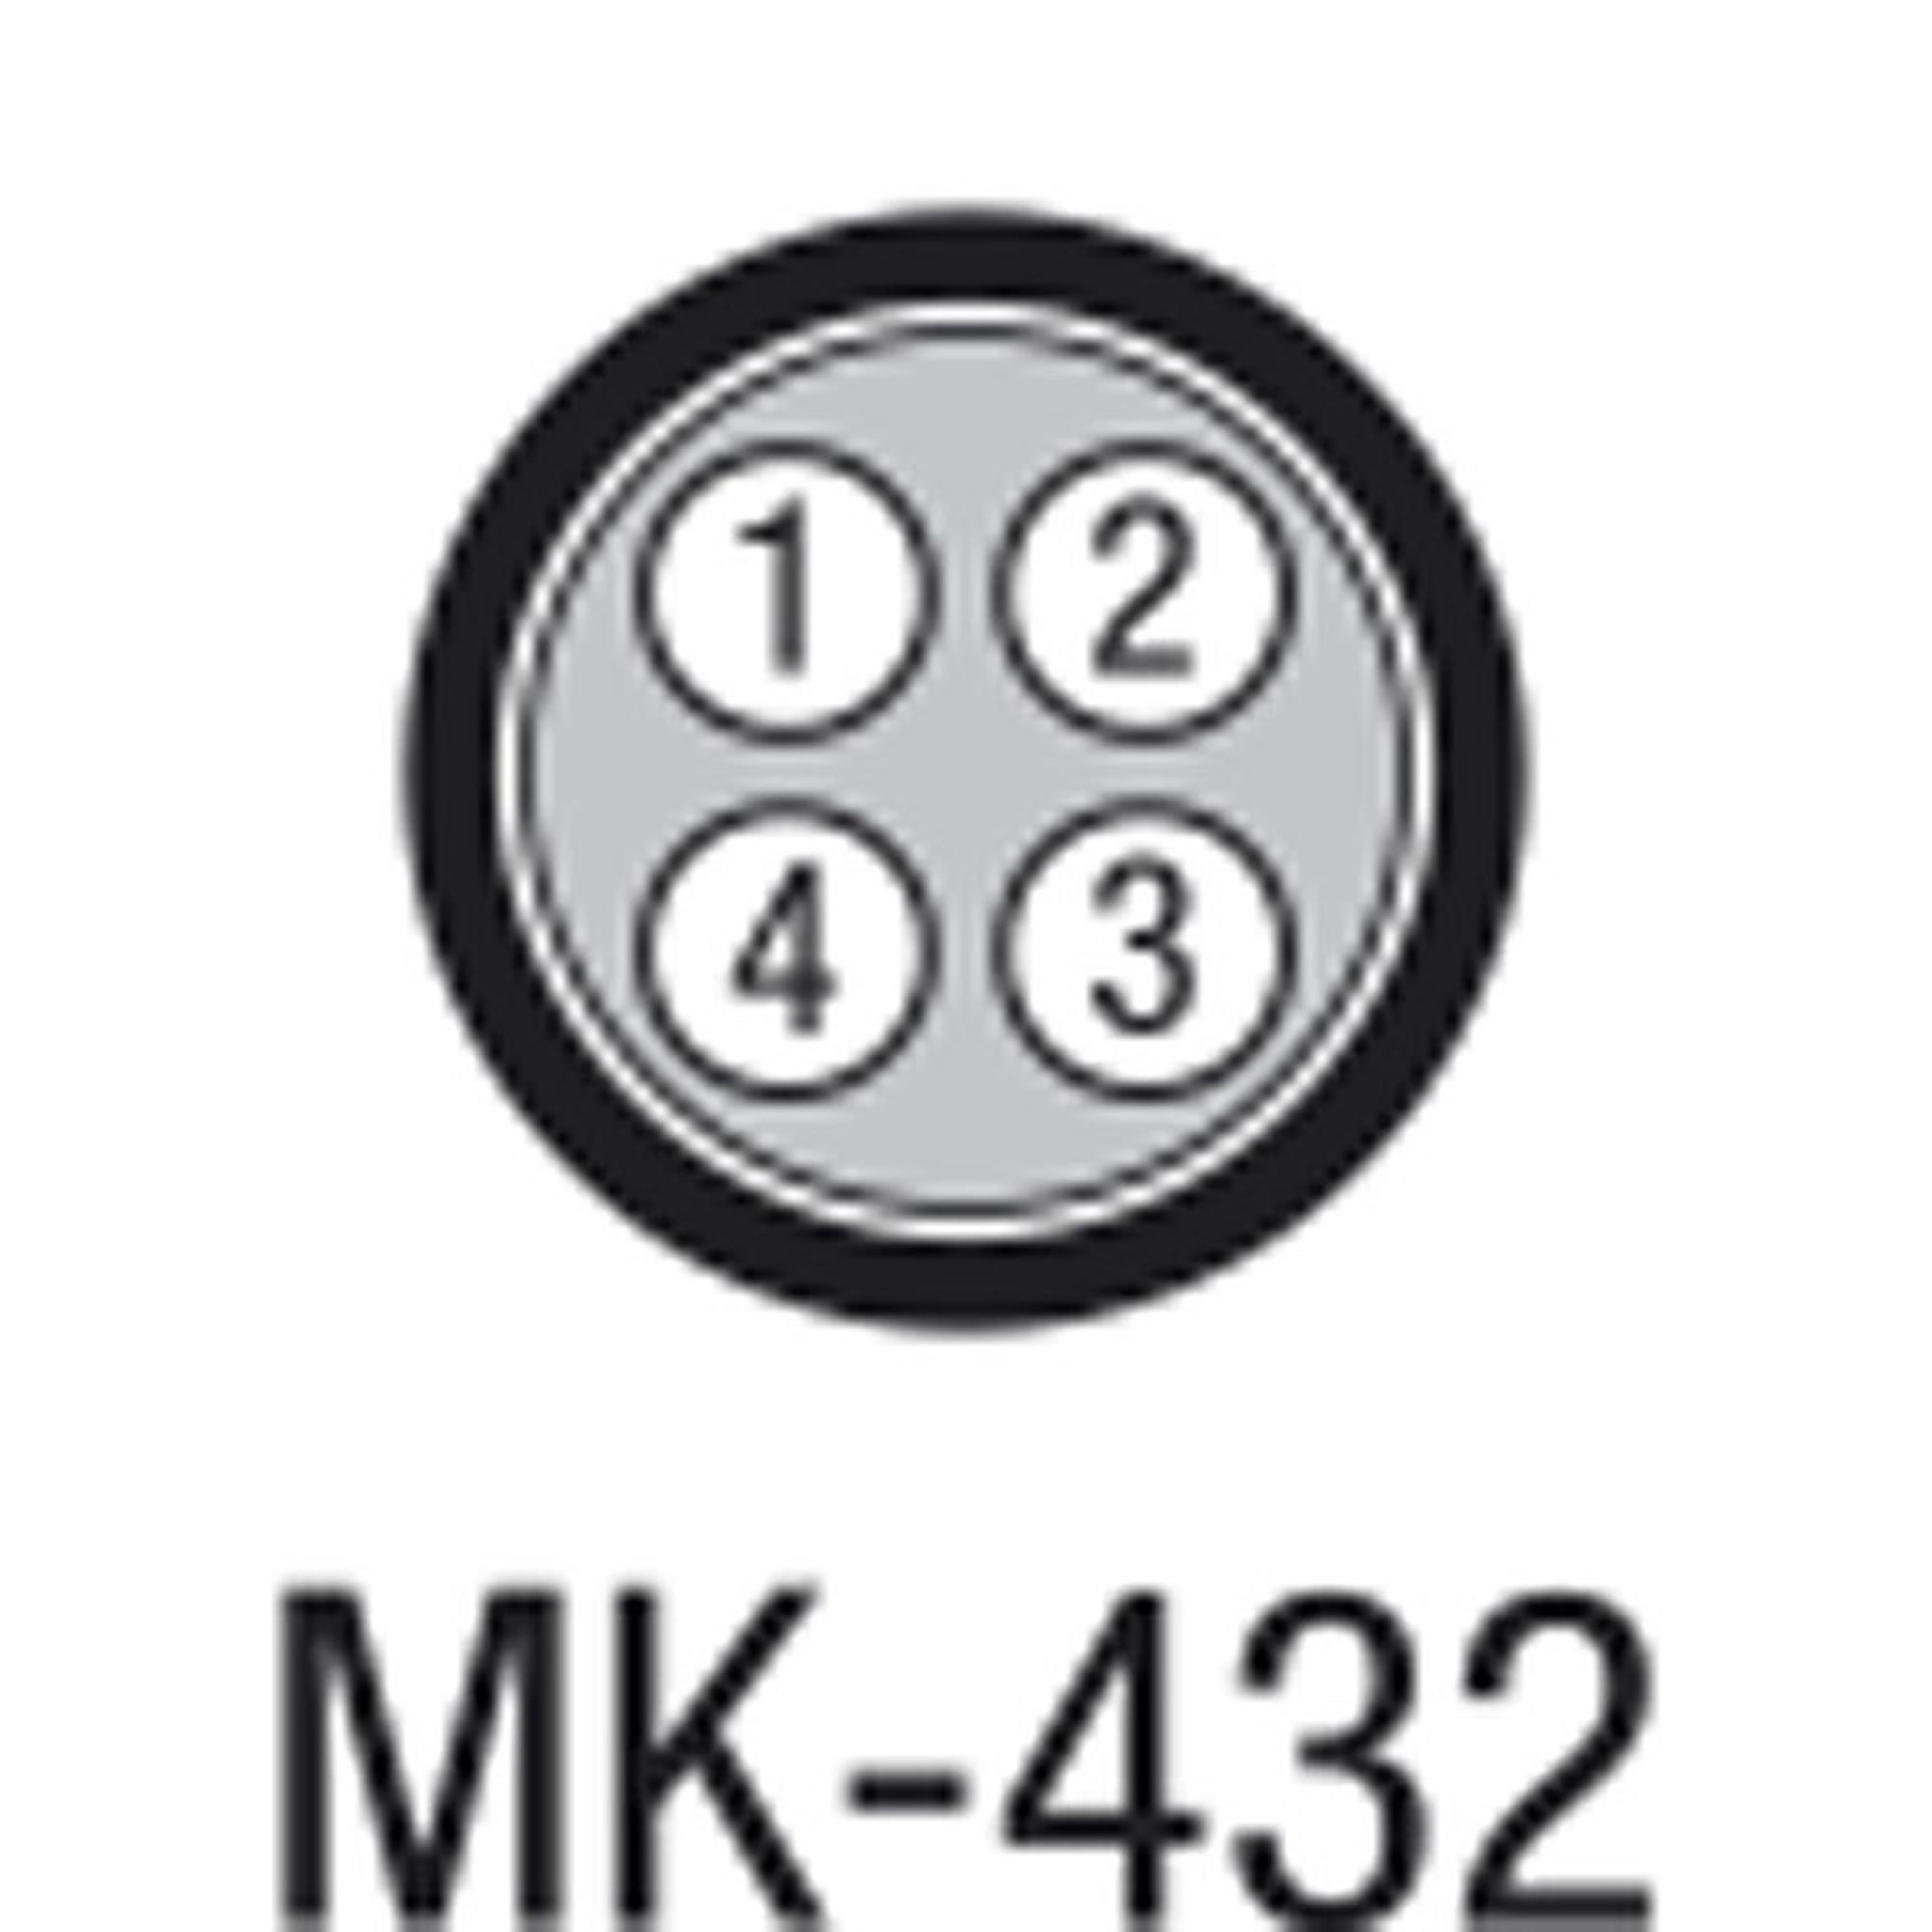 DAP MK-432 Studio Multicore 4adriges Kabel - doppelt geschirmt